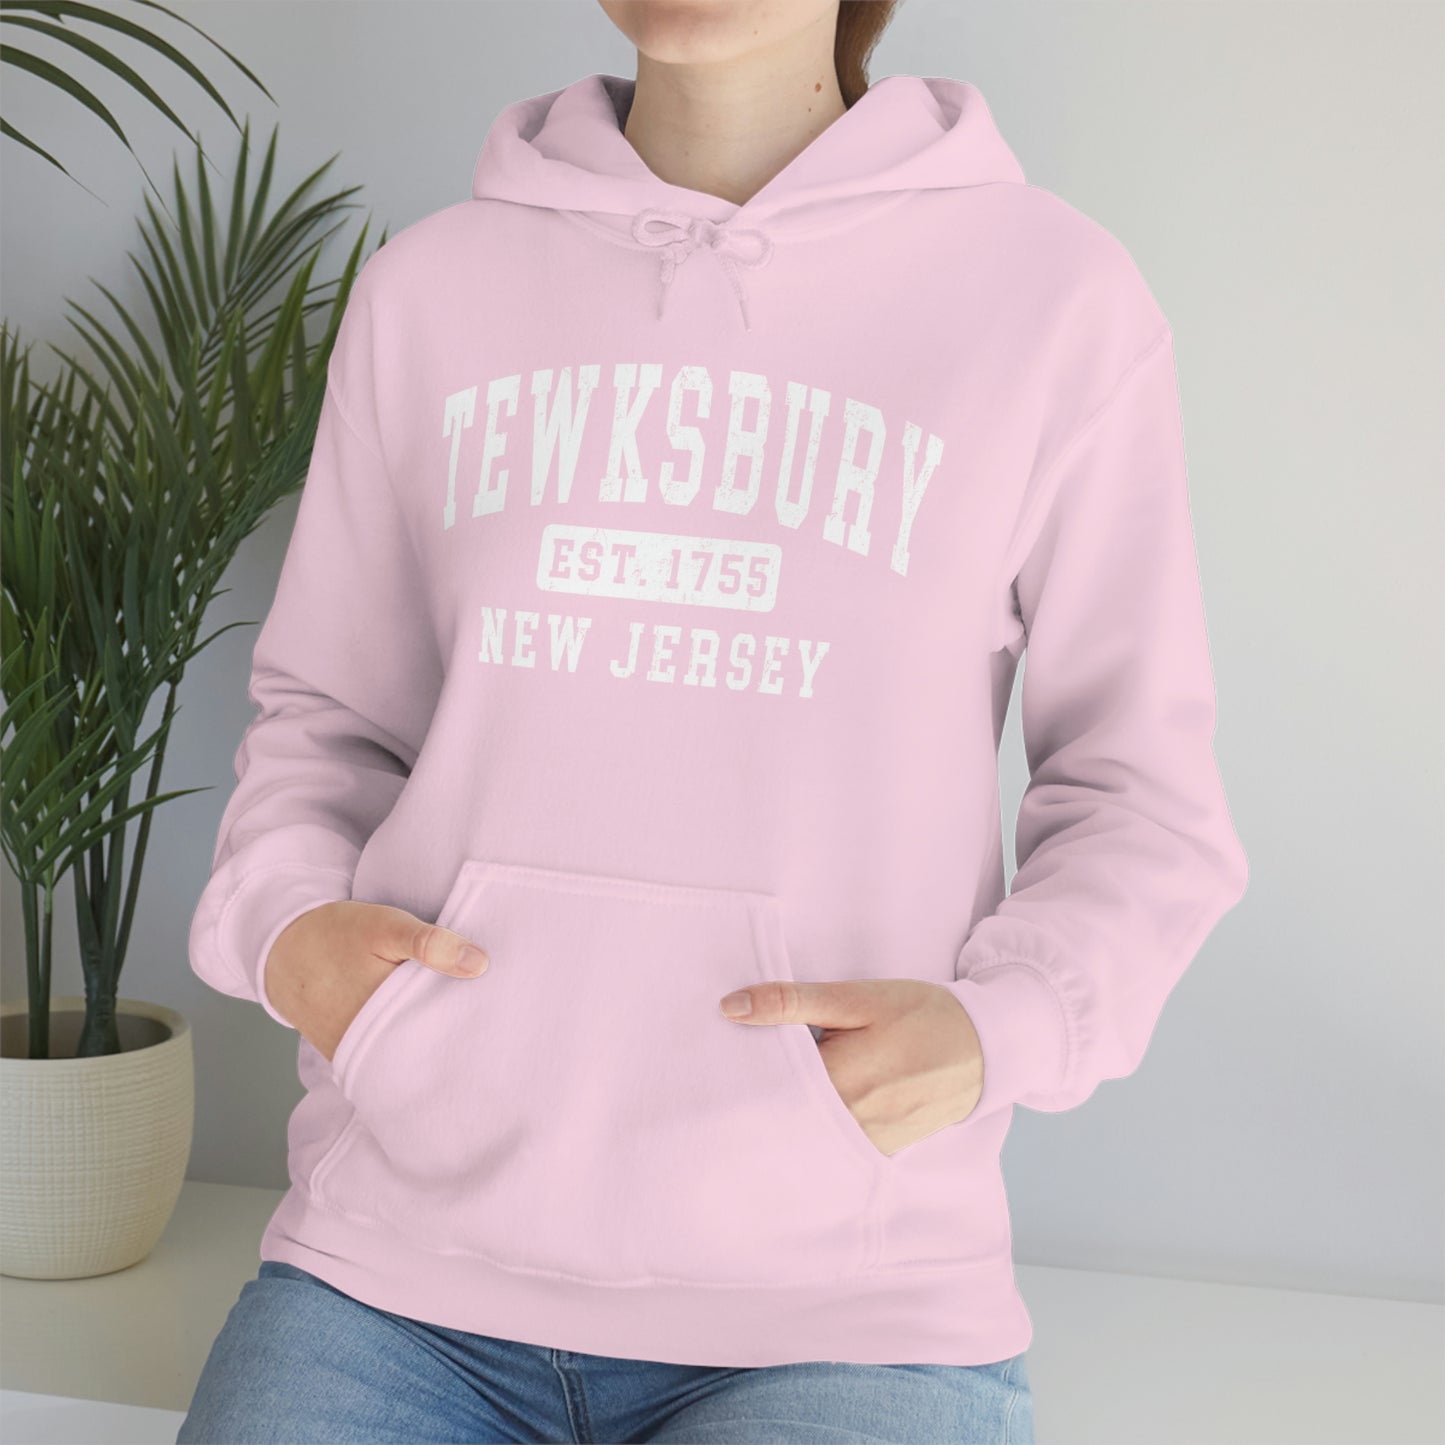 Unisex Heavy Blend™ Hooded Sweatshirt - Tewksbury Classic